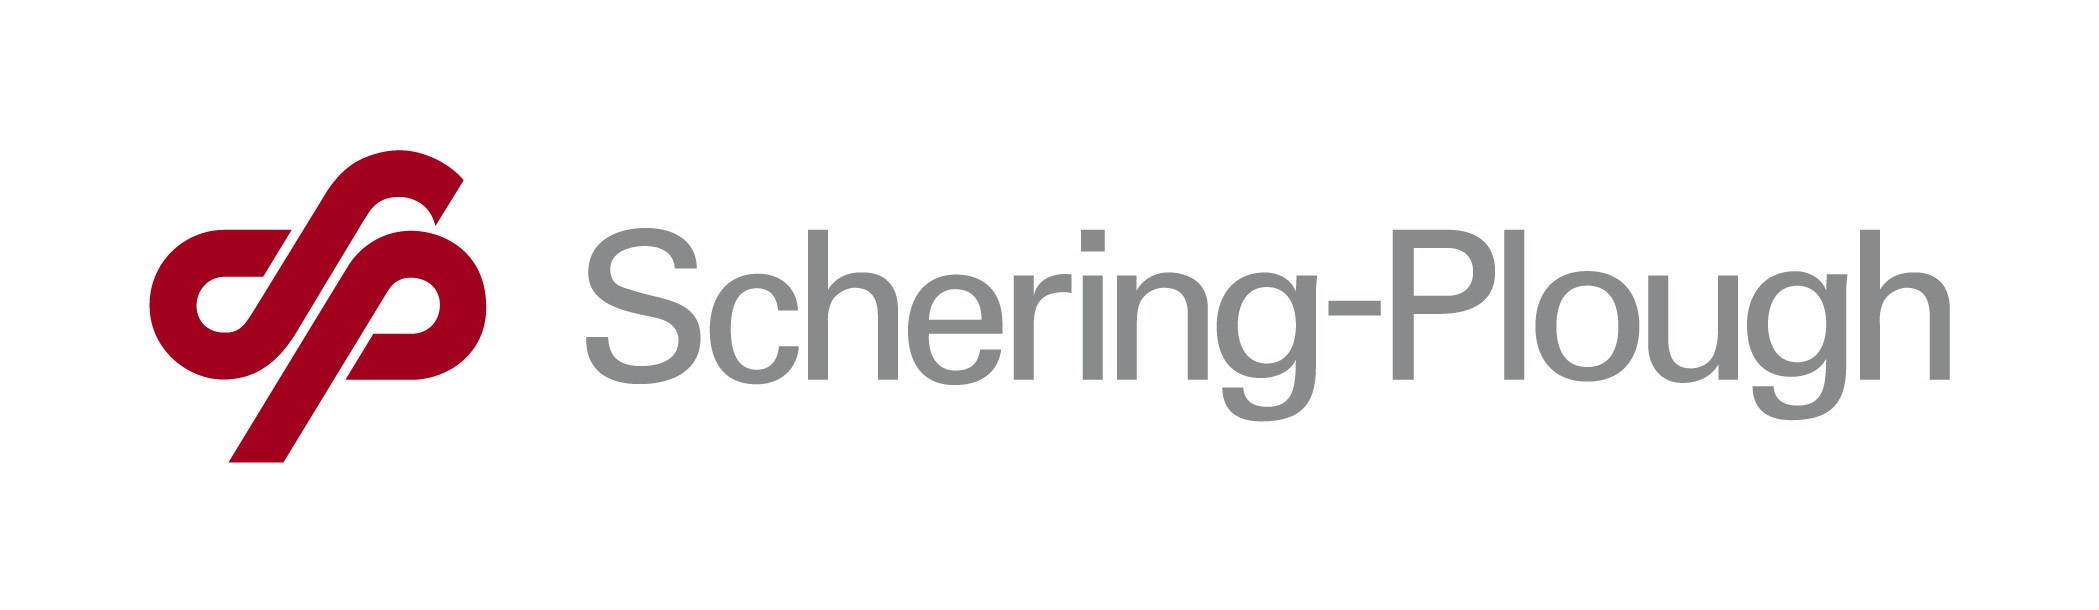 Shering-Ploud Logo photo - 1